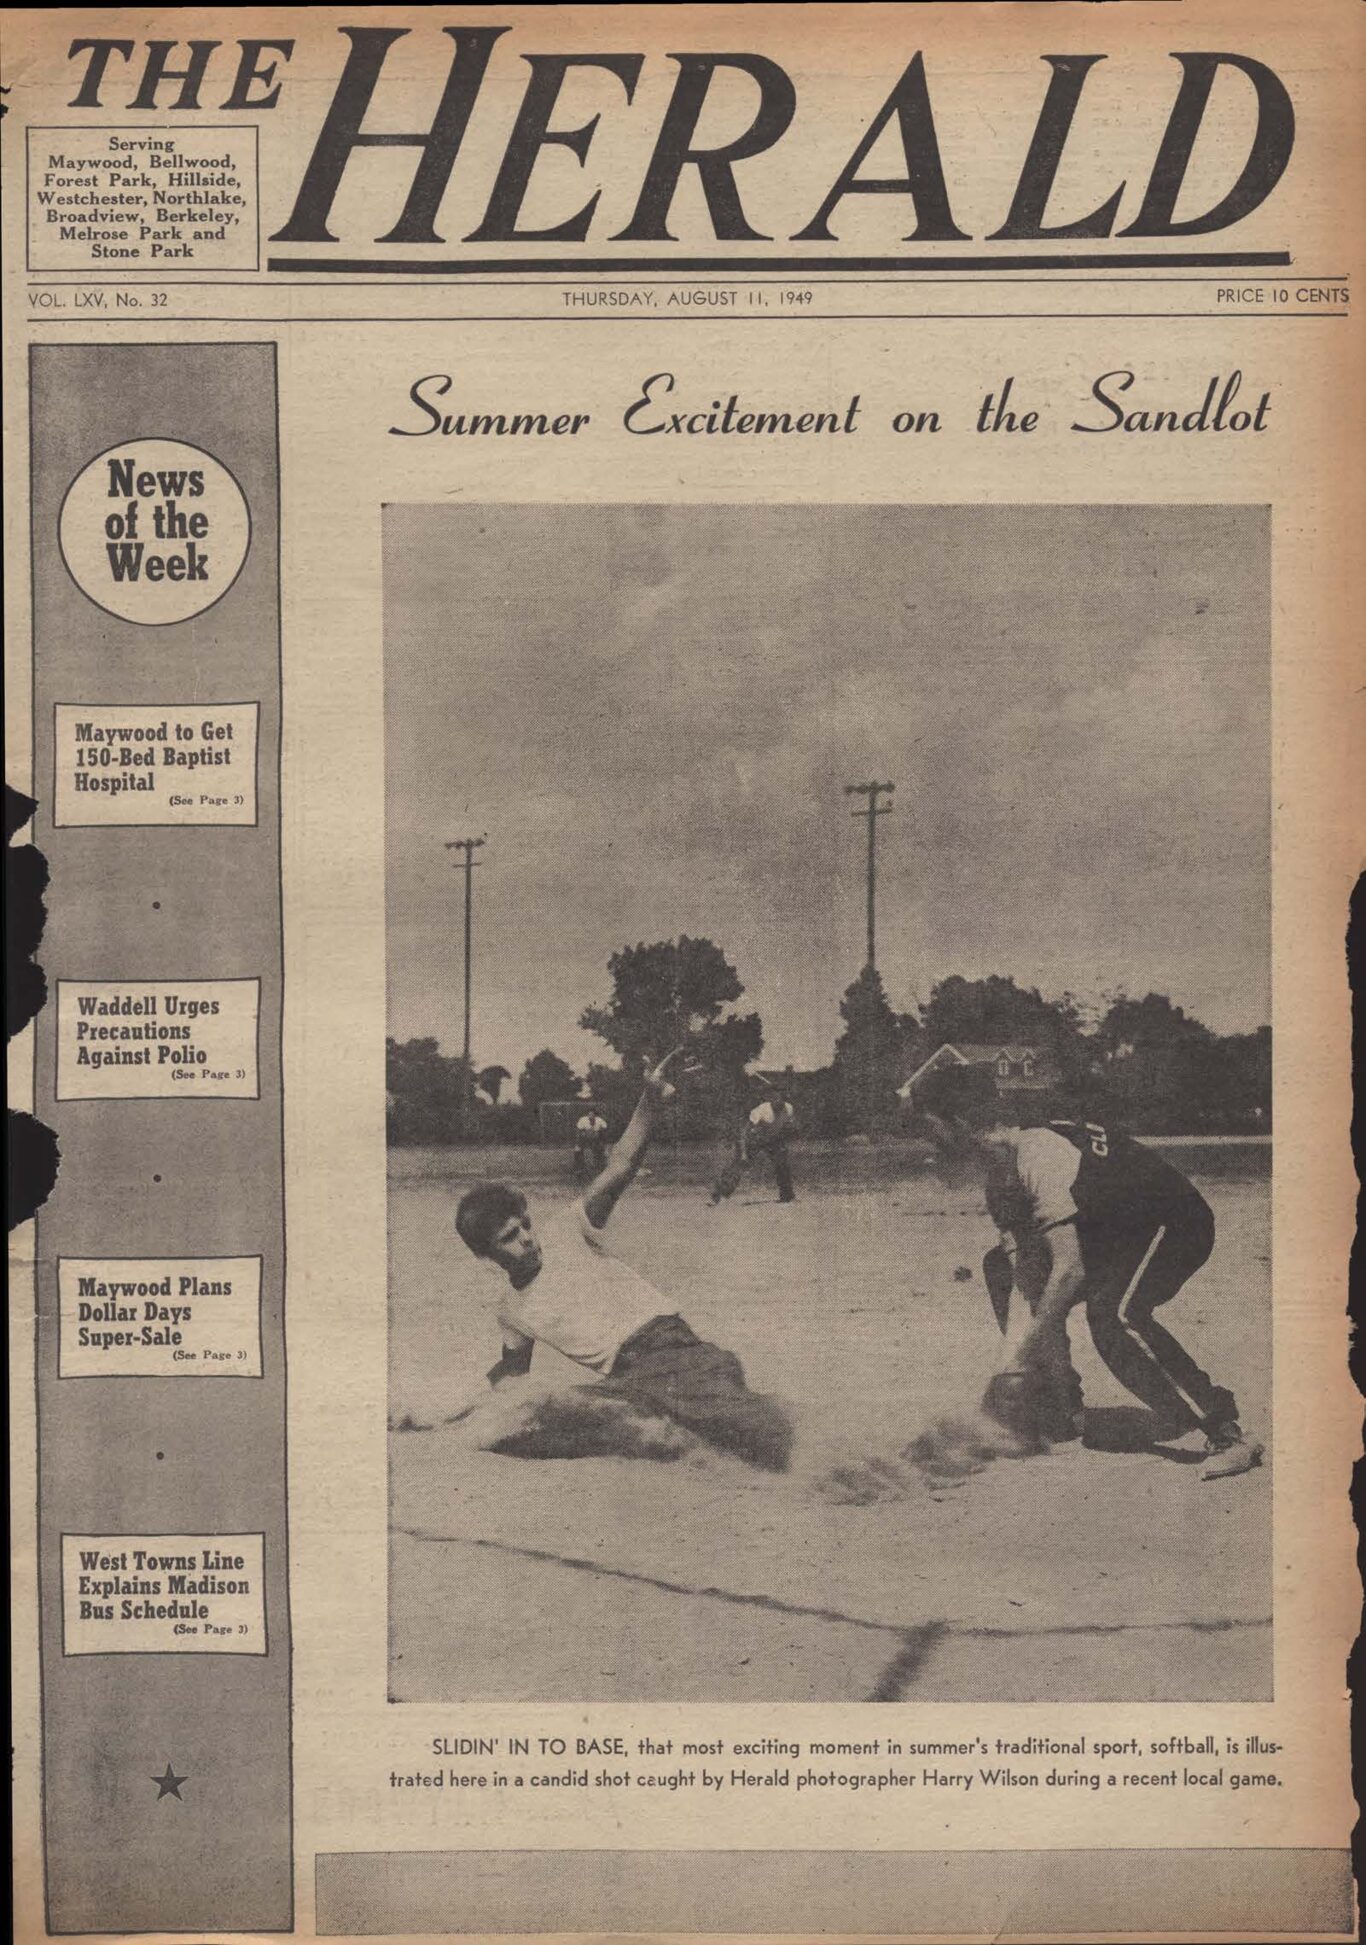 The Herald – 19490811